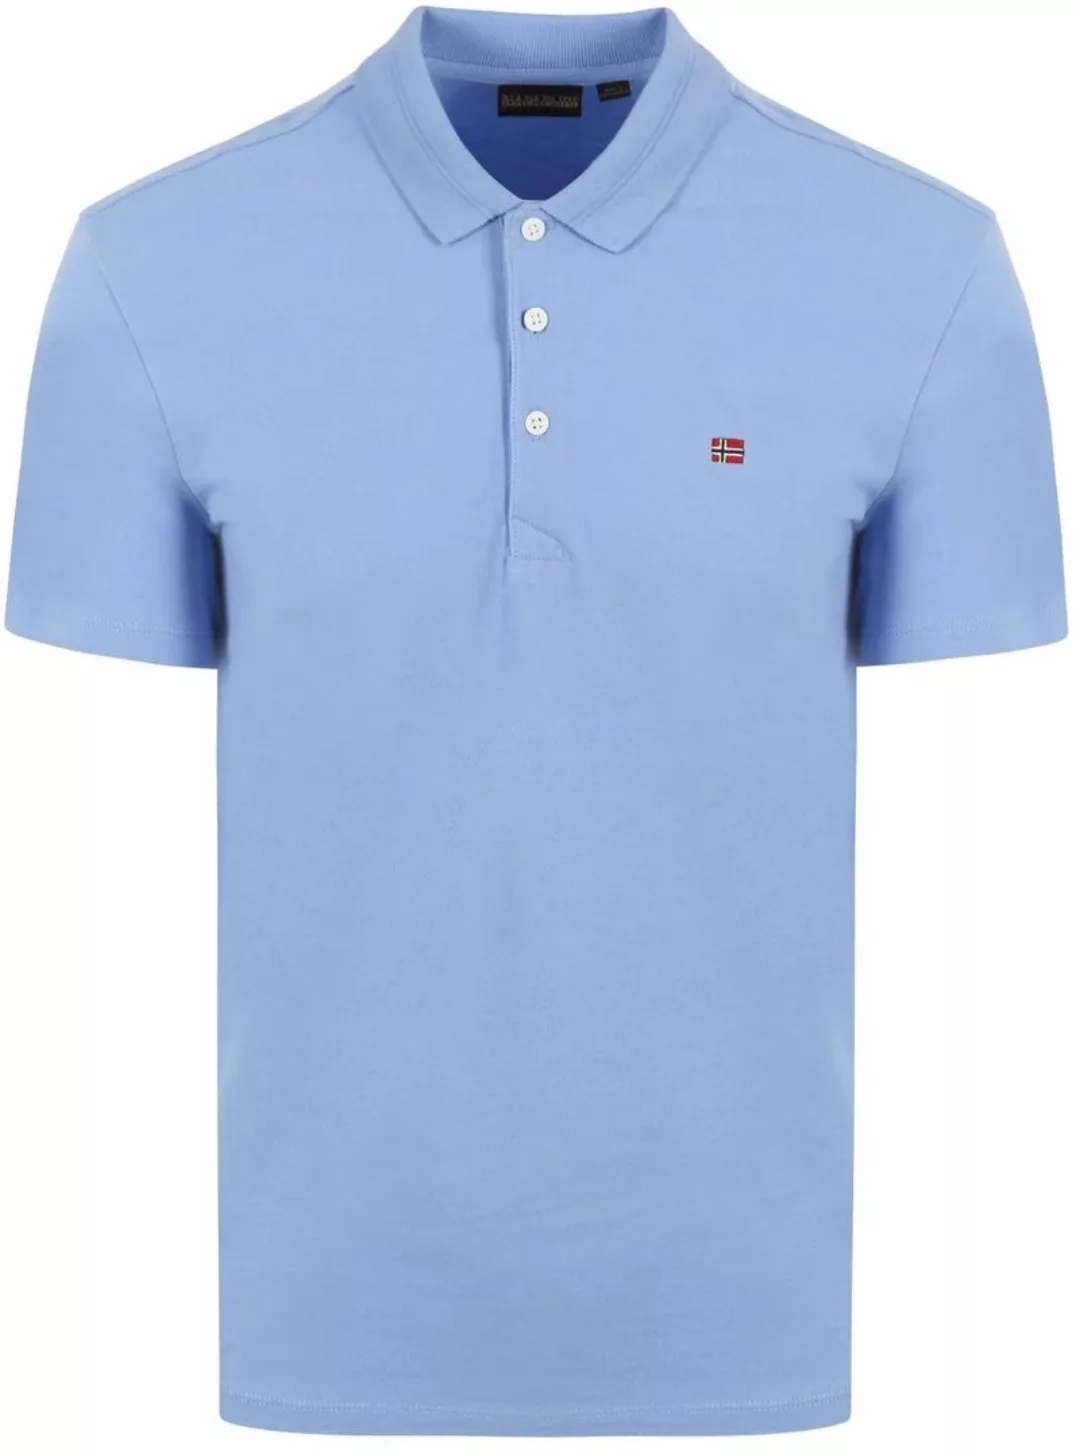 Napapijri Ealis Poloshirt Hellblau - Größe M günstig online kaufen